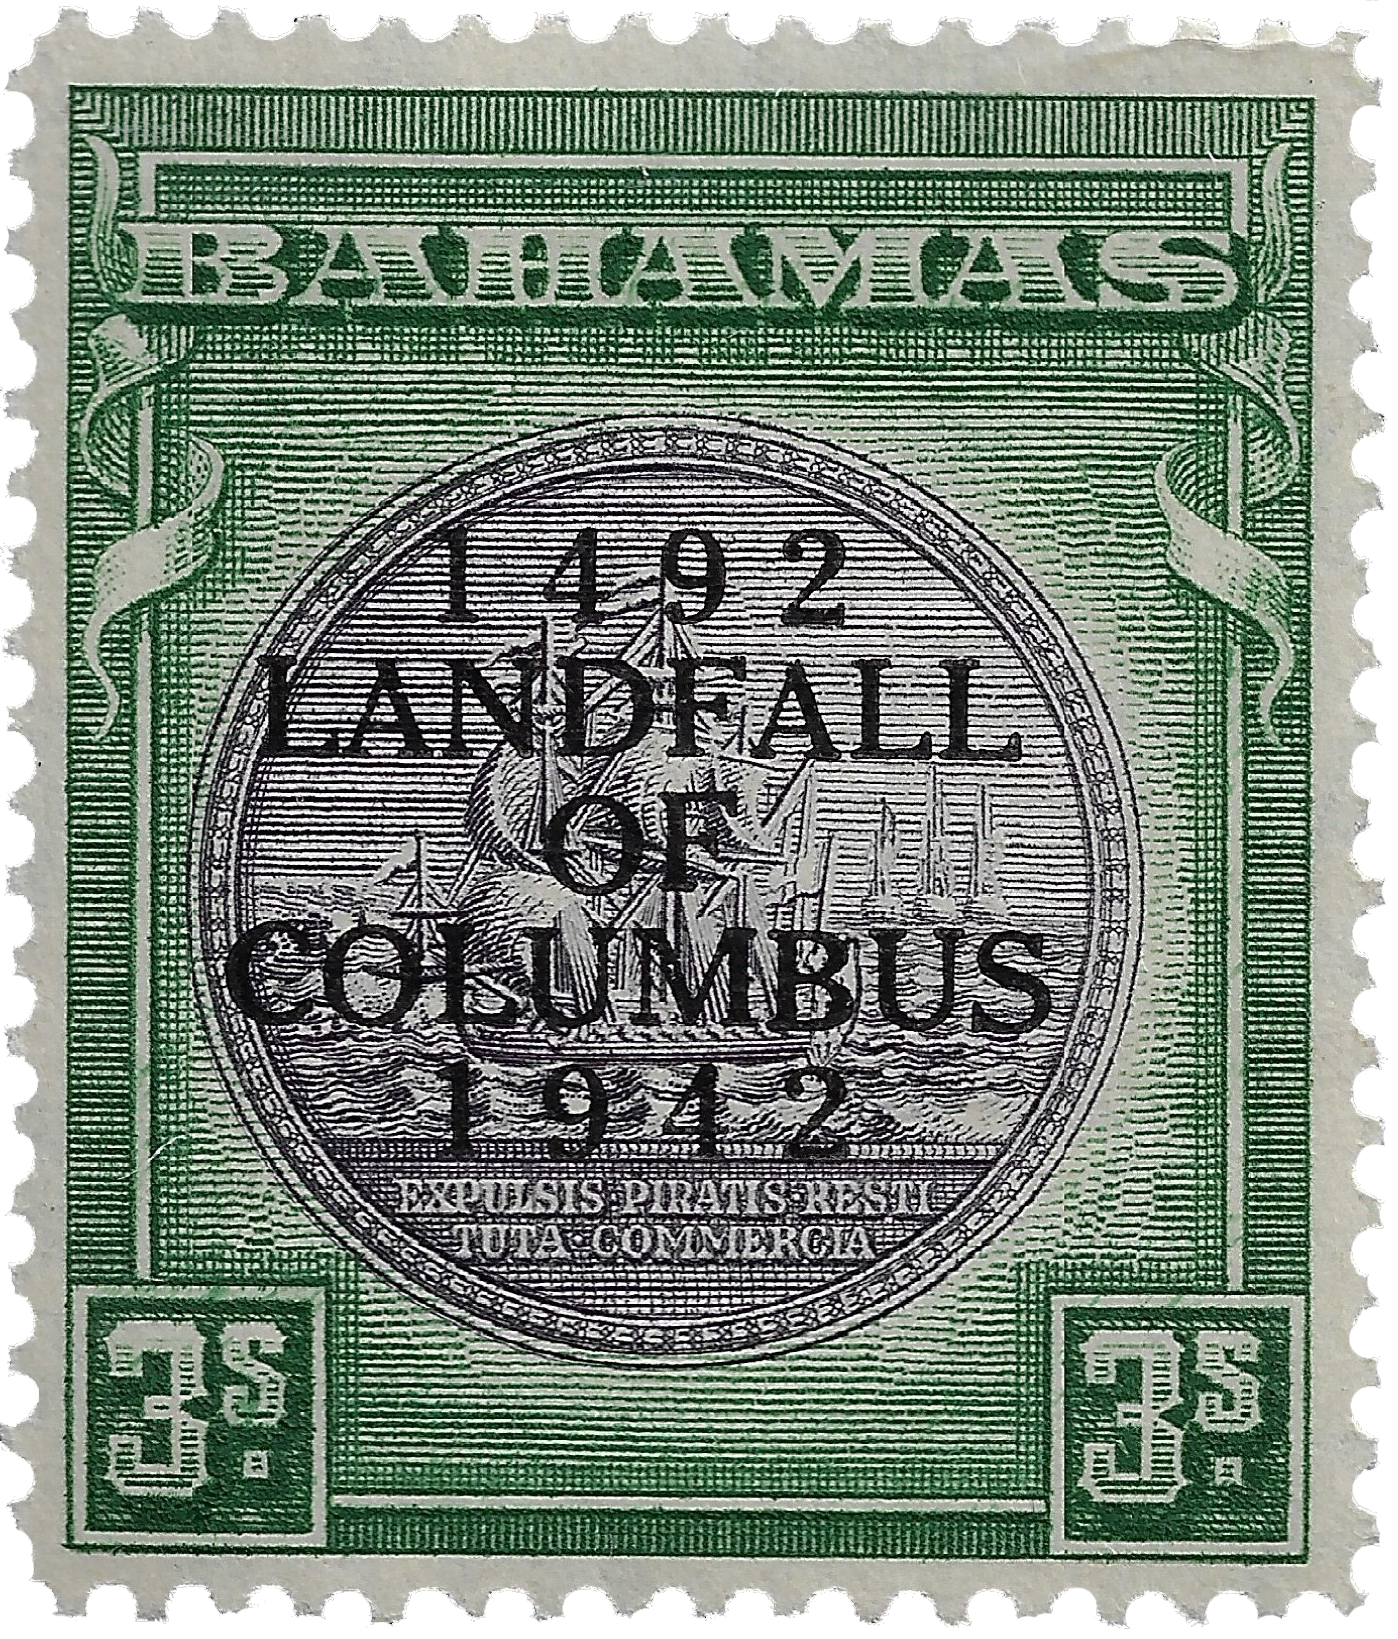 3s 1942, 1492 Landfall of Columbus